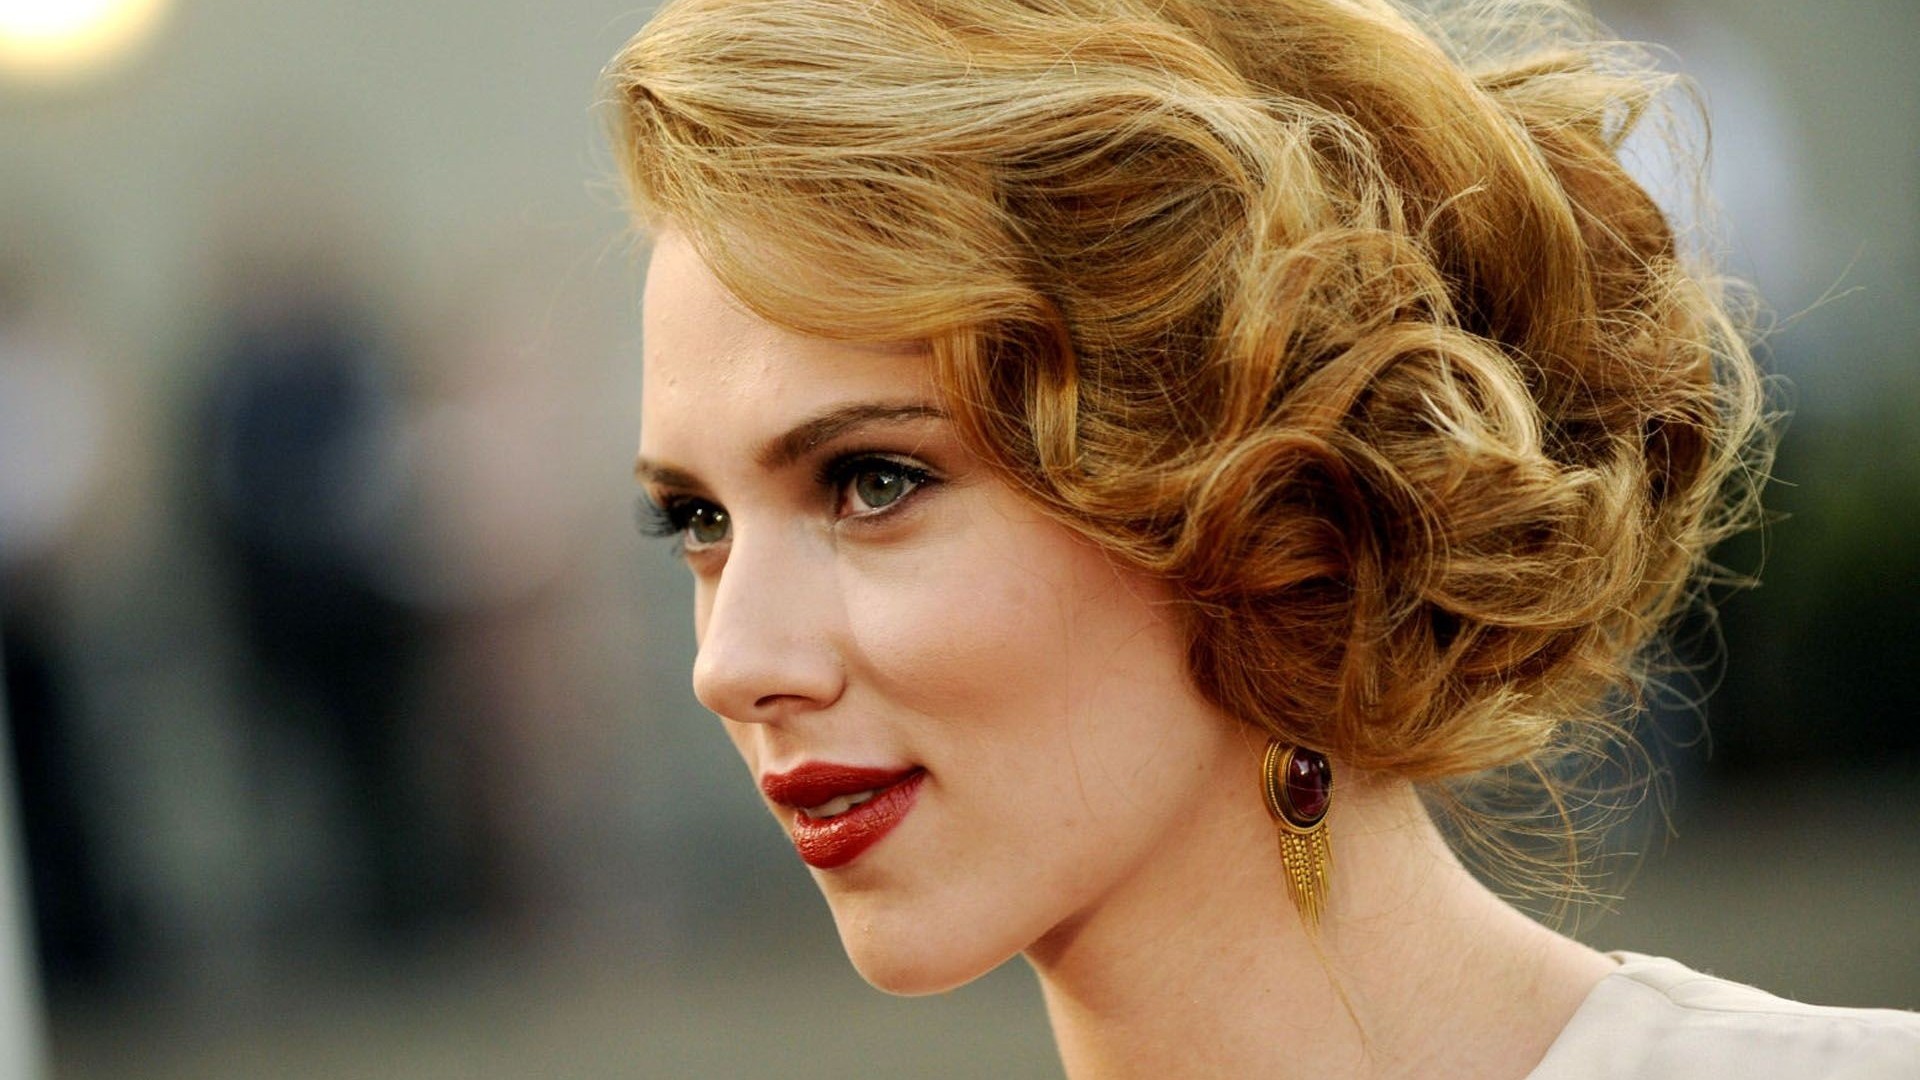 2. Scarlett Johansson – US$ 35,5 milhões 